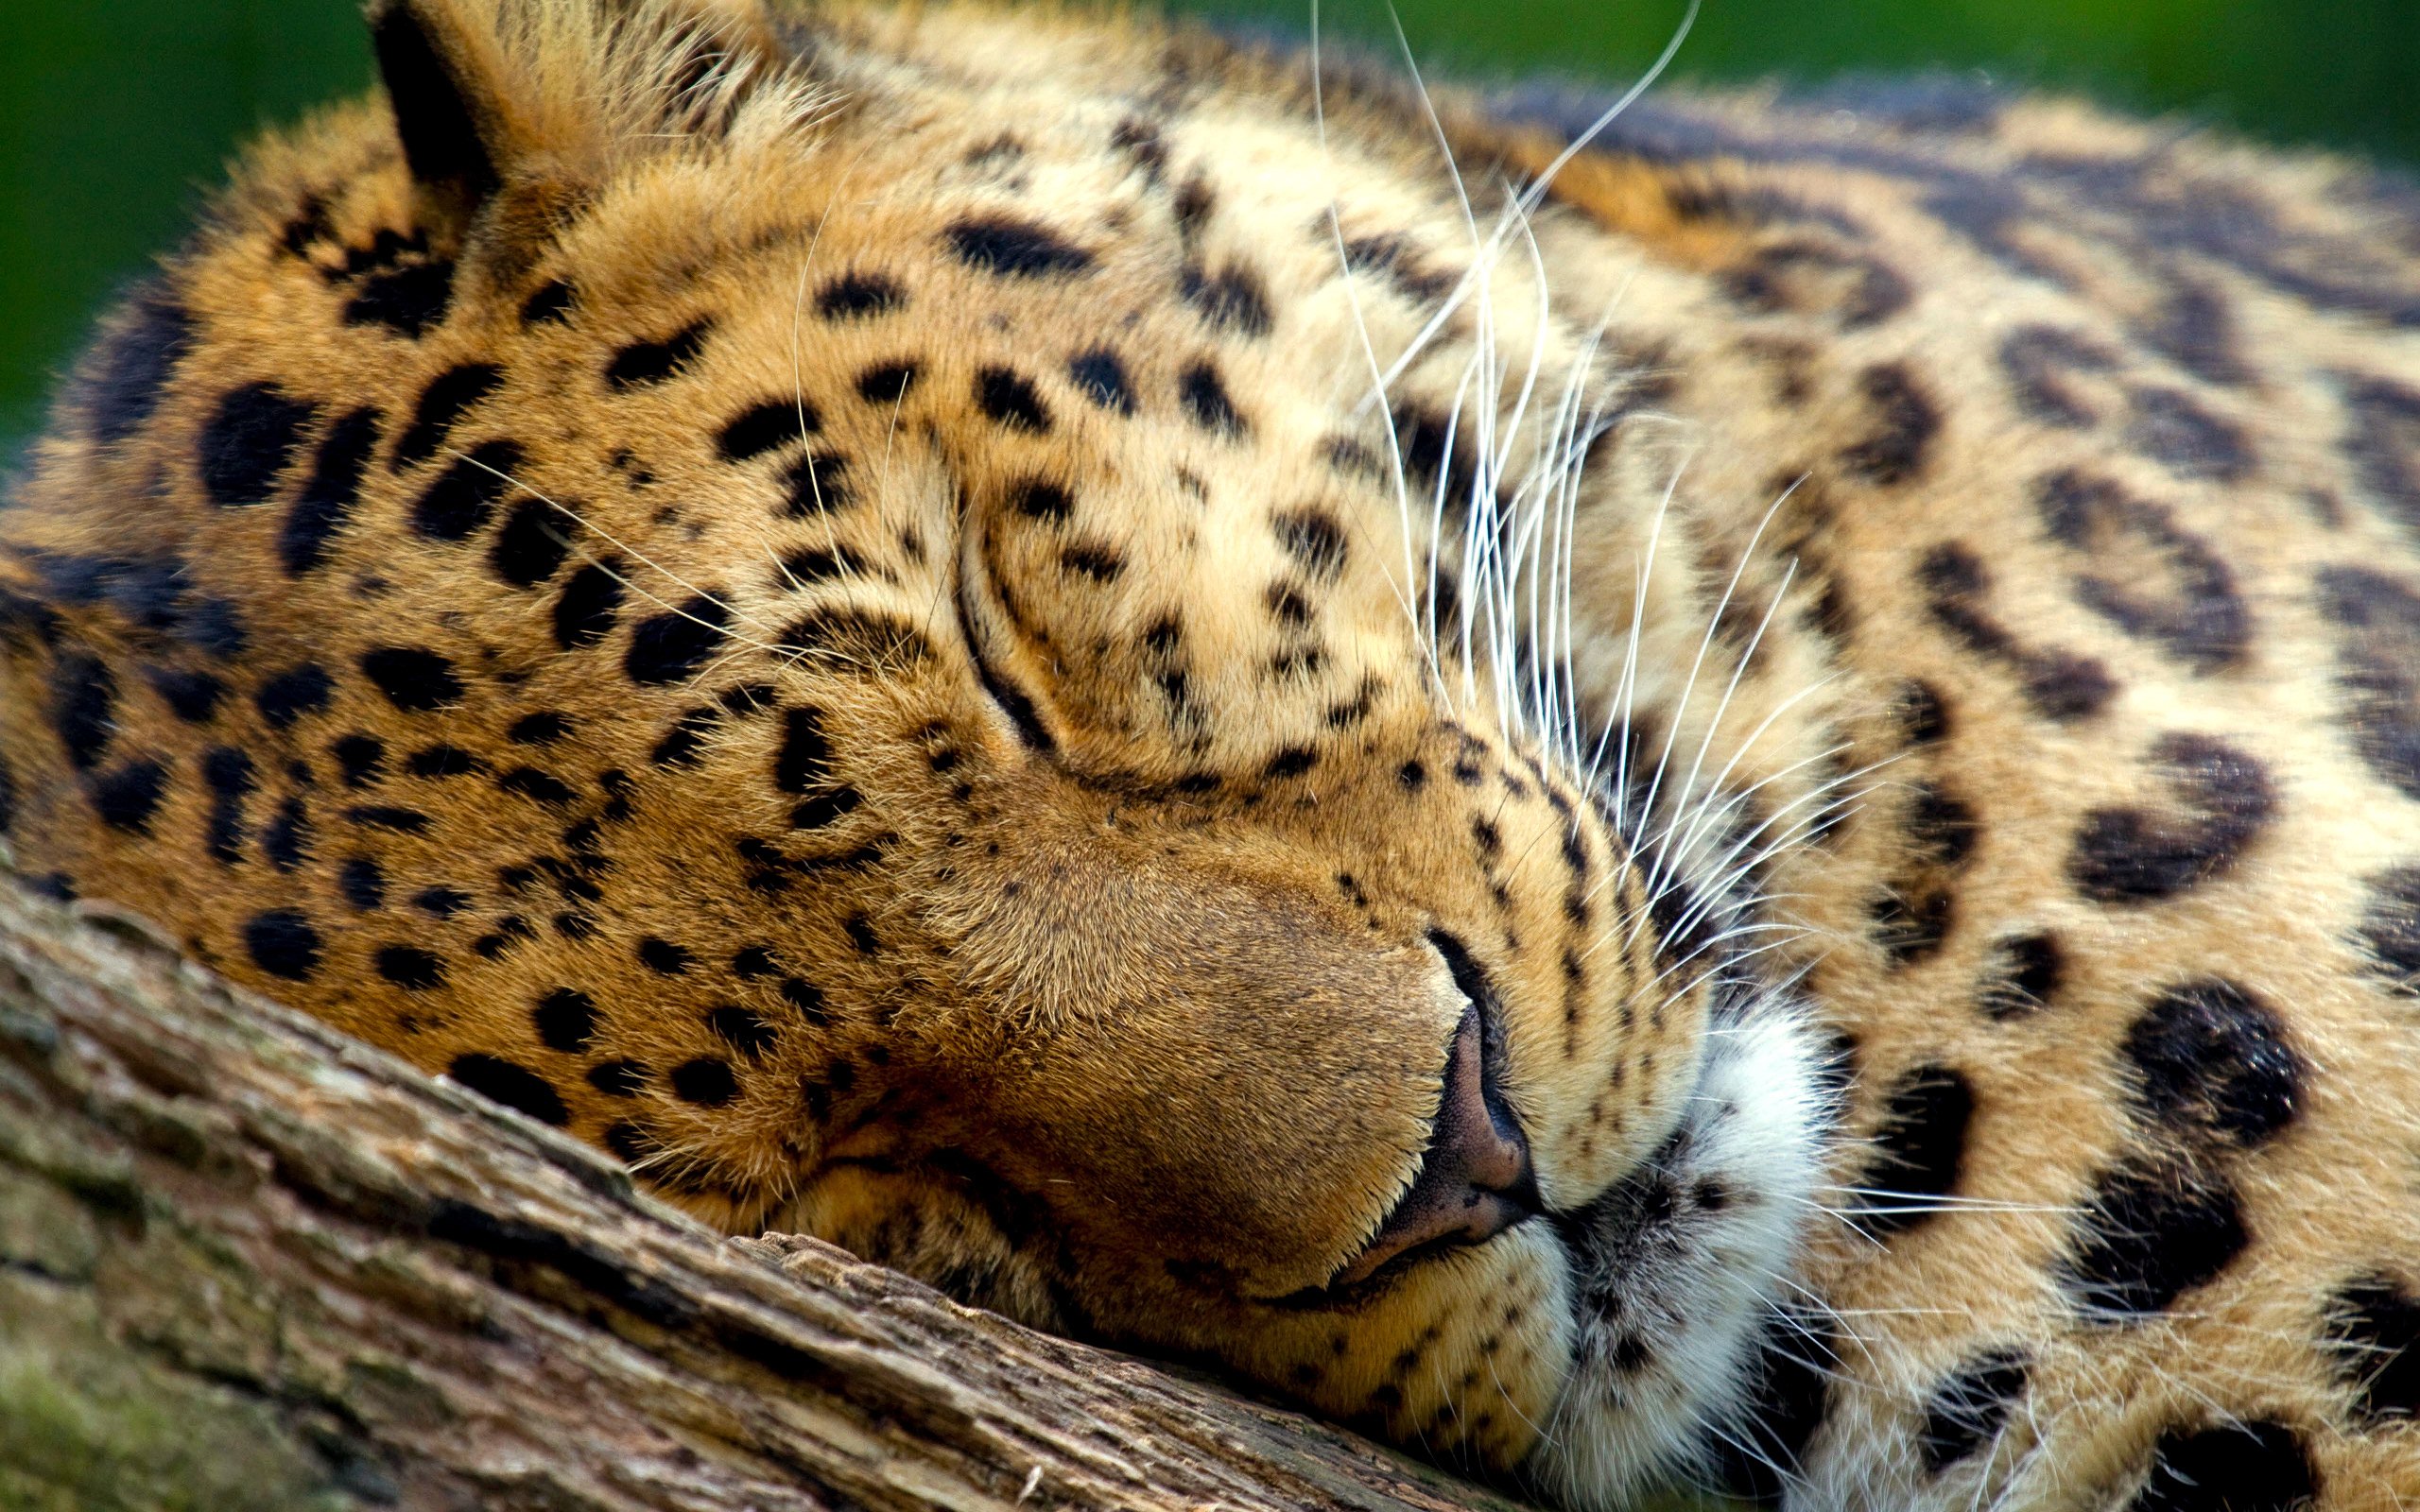 Sleeping Leopard301869951 - Sleeping Leopard - Sleeping, Seagulls, Leopard